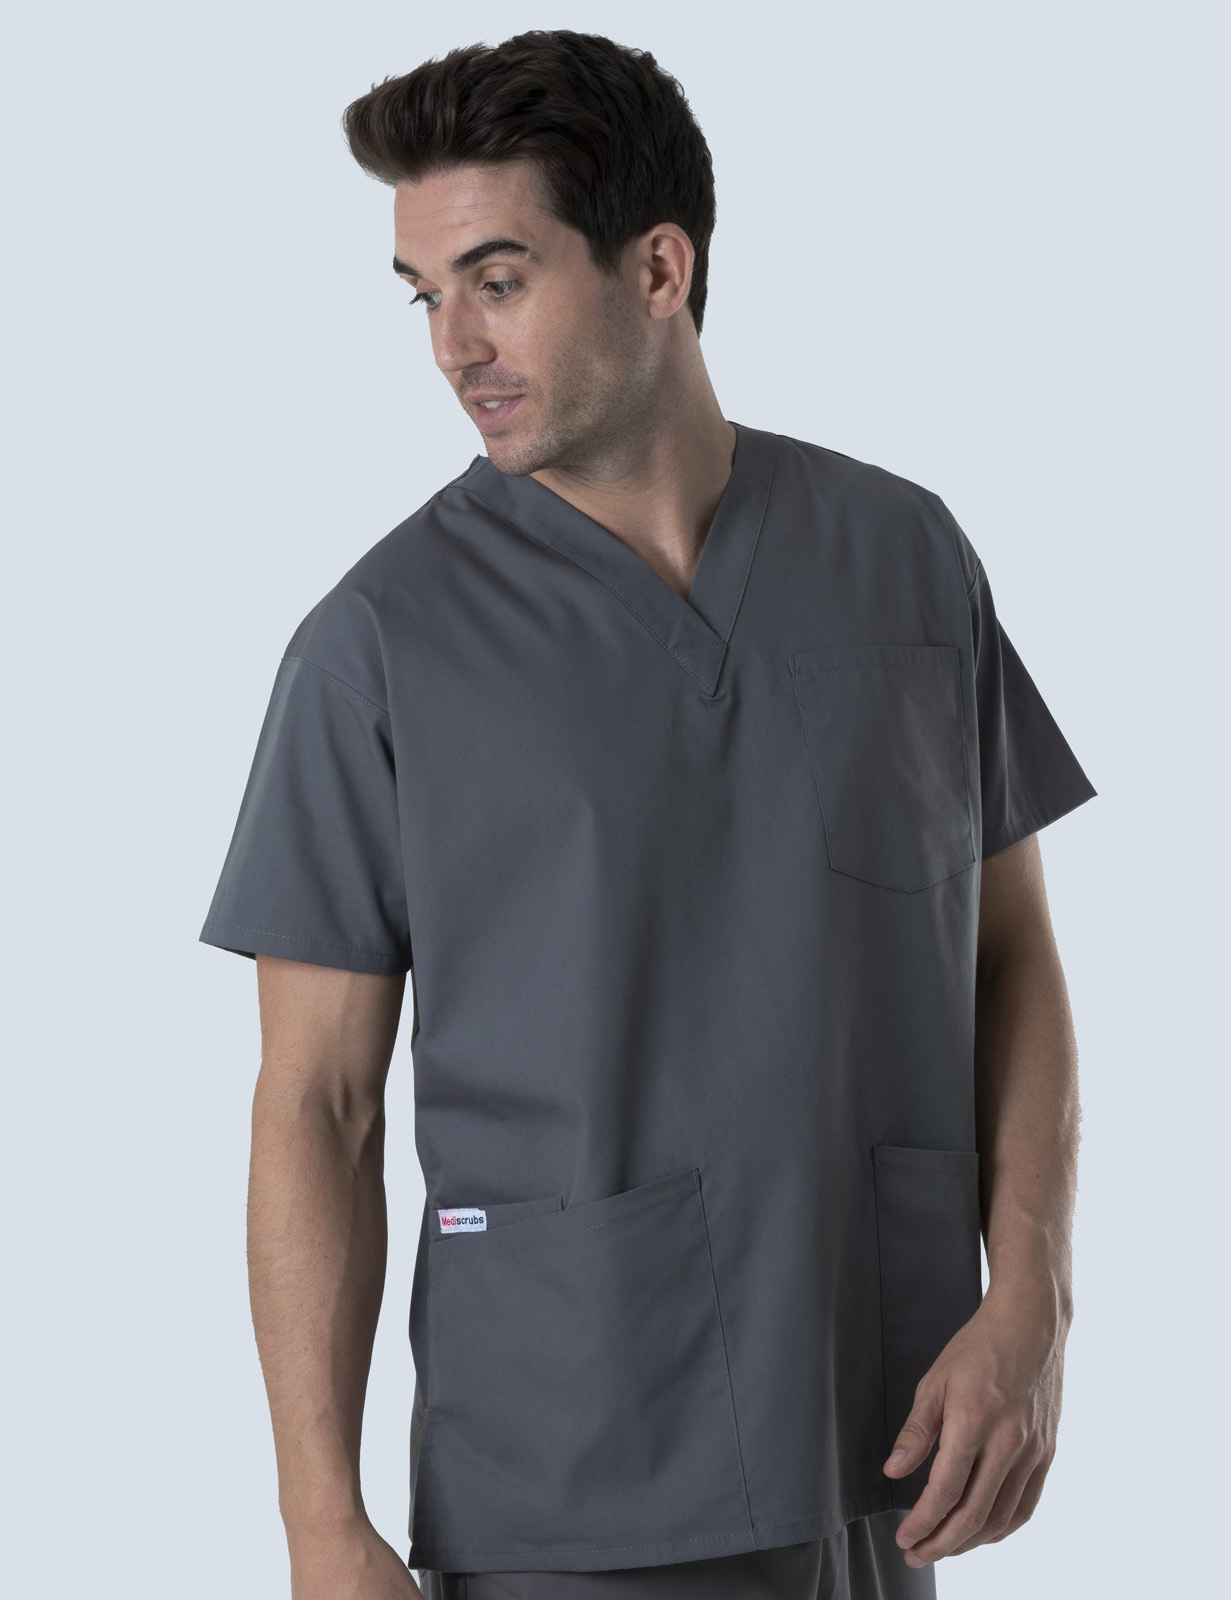 PAH - RMO Junior Doctor (4 Pocket Scrub Top and Cargo Pants in Steel Grey)